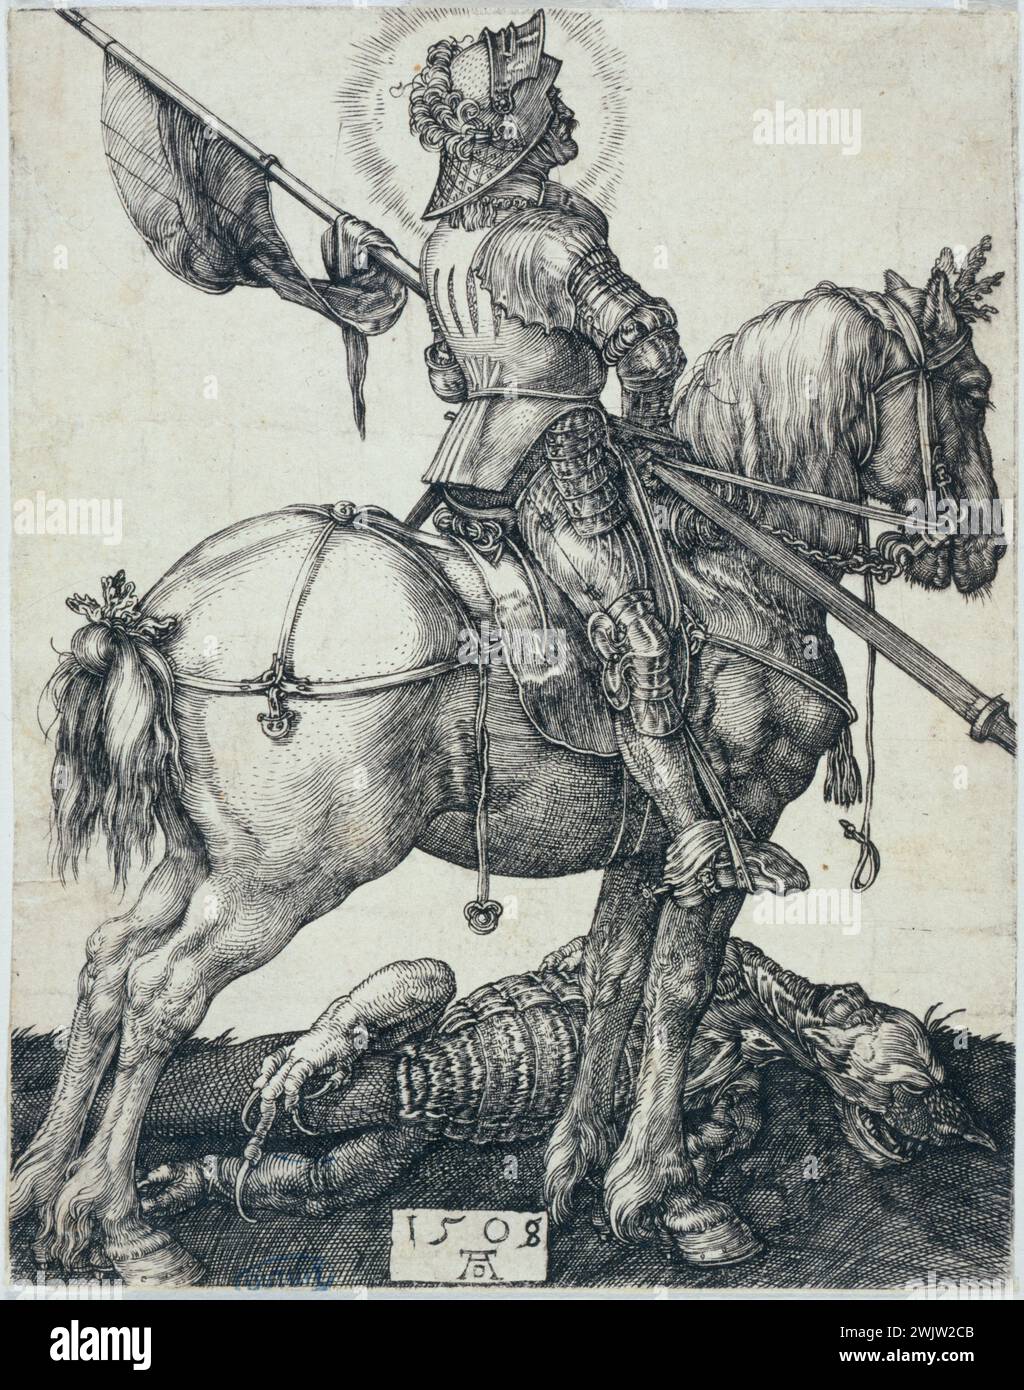 Albrecht Dürer (1471-1528). 'Saint Georges on horseback, B. 54'. Engraving. Museum of Fine Arts of the City of Paris, Petit Palais. 34091-9 Armor, b 54, fantastic beast, rider, horse, dragon, death, new will, saint, animal, engraving Stock Photo